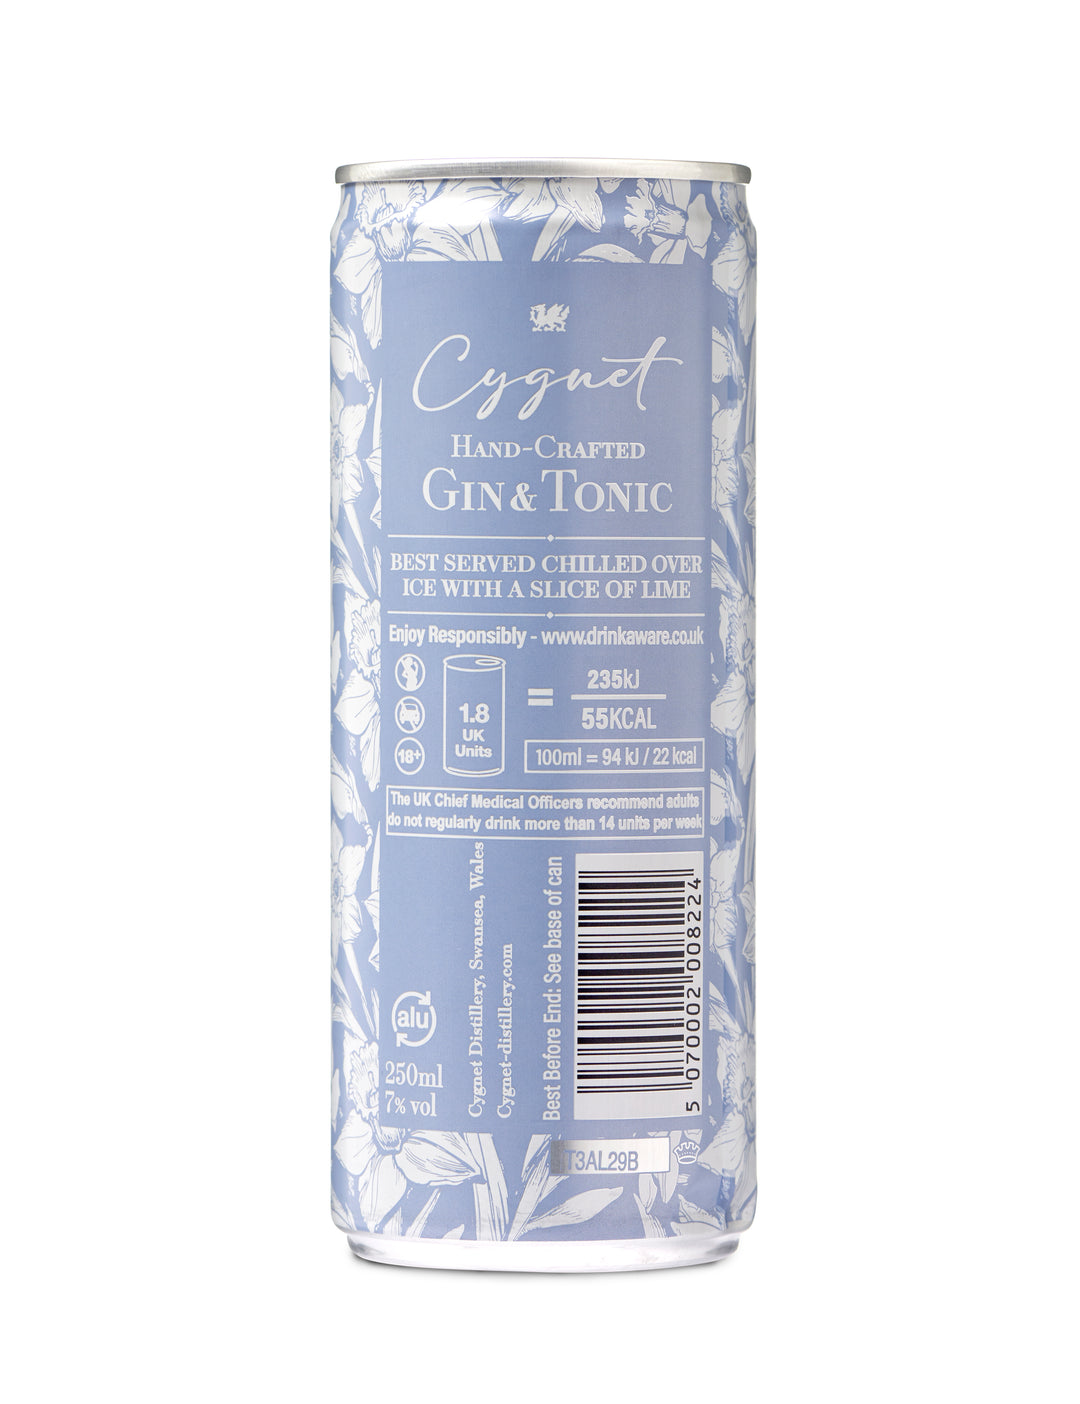 Cygnet Welsh Dry Gin & Tonic  (12 Pack)